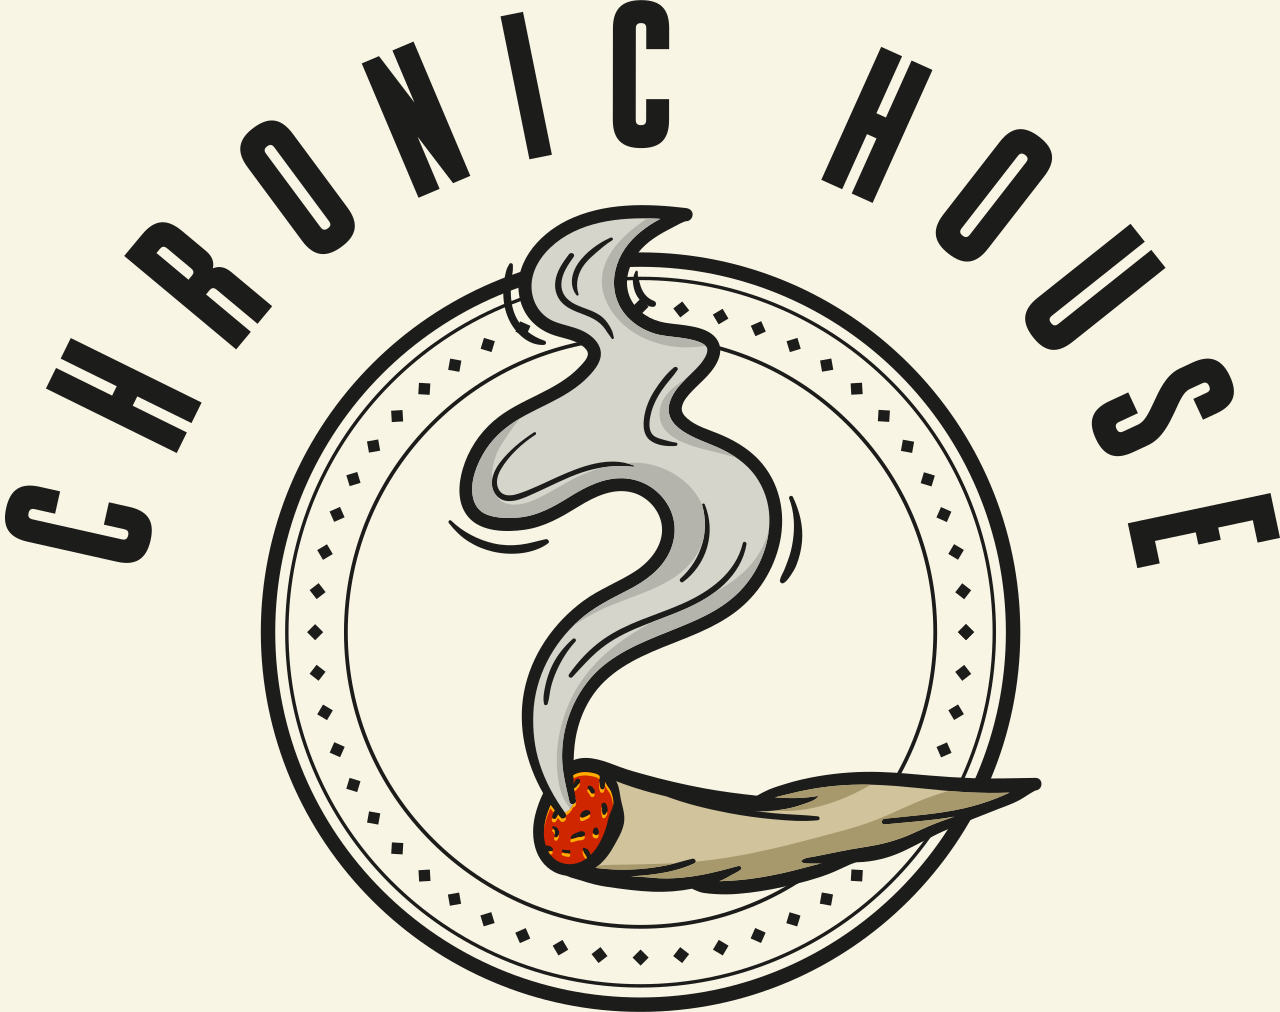 CHRONIC HOUSE's logo